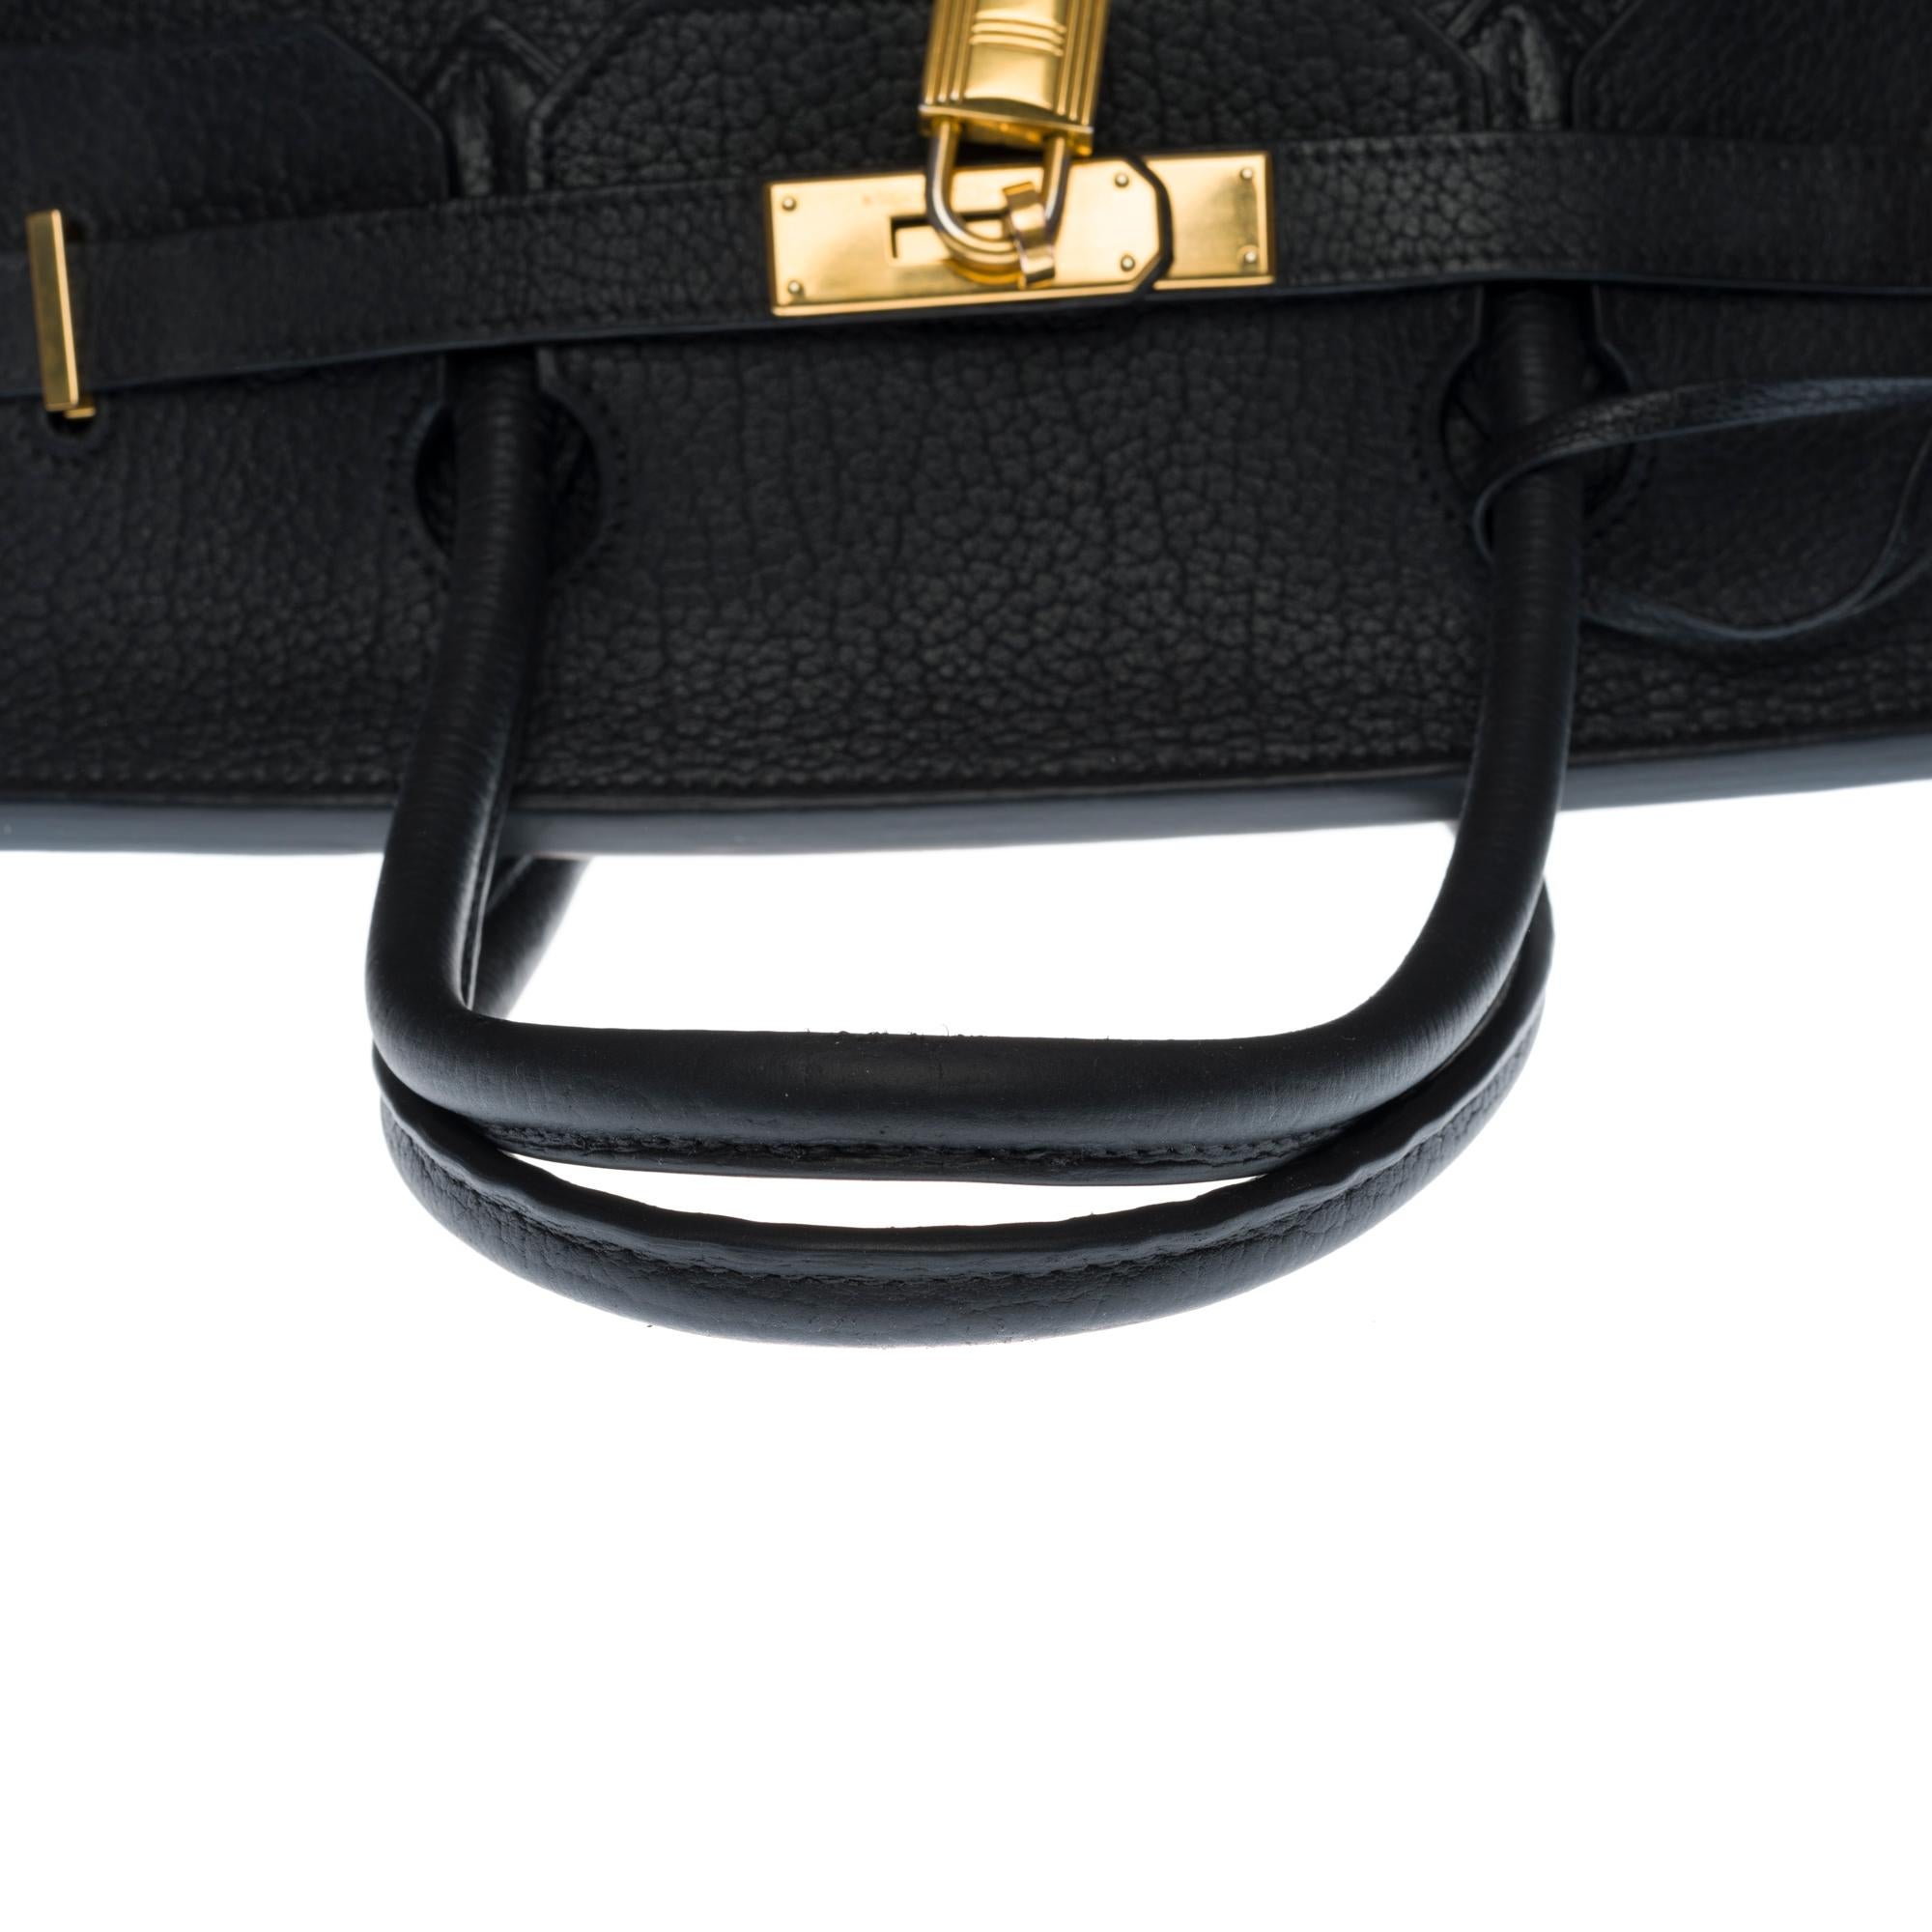 Stunning Hermes Birkin 40cm handbag in Black Togo leather, GHW 4